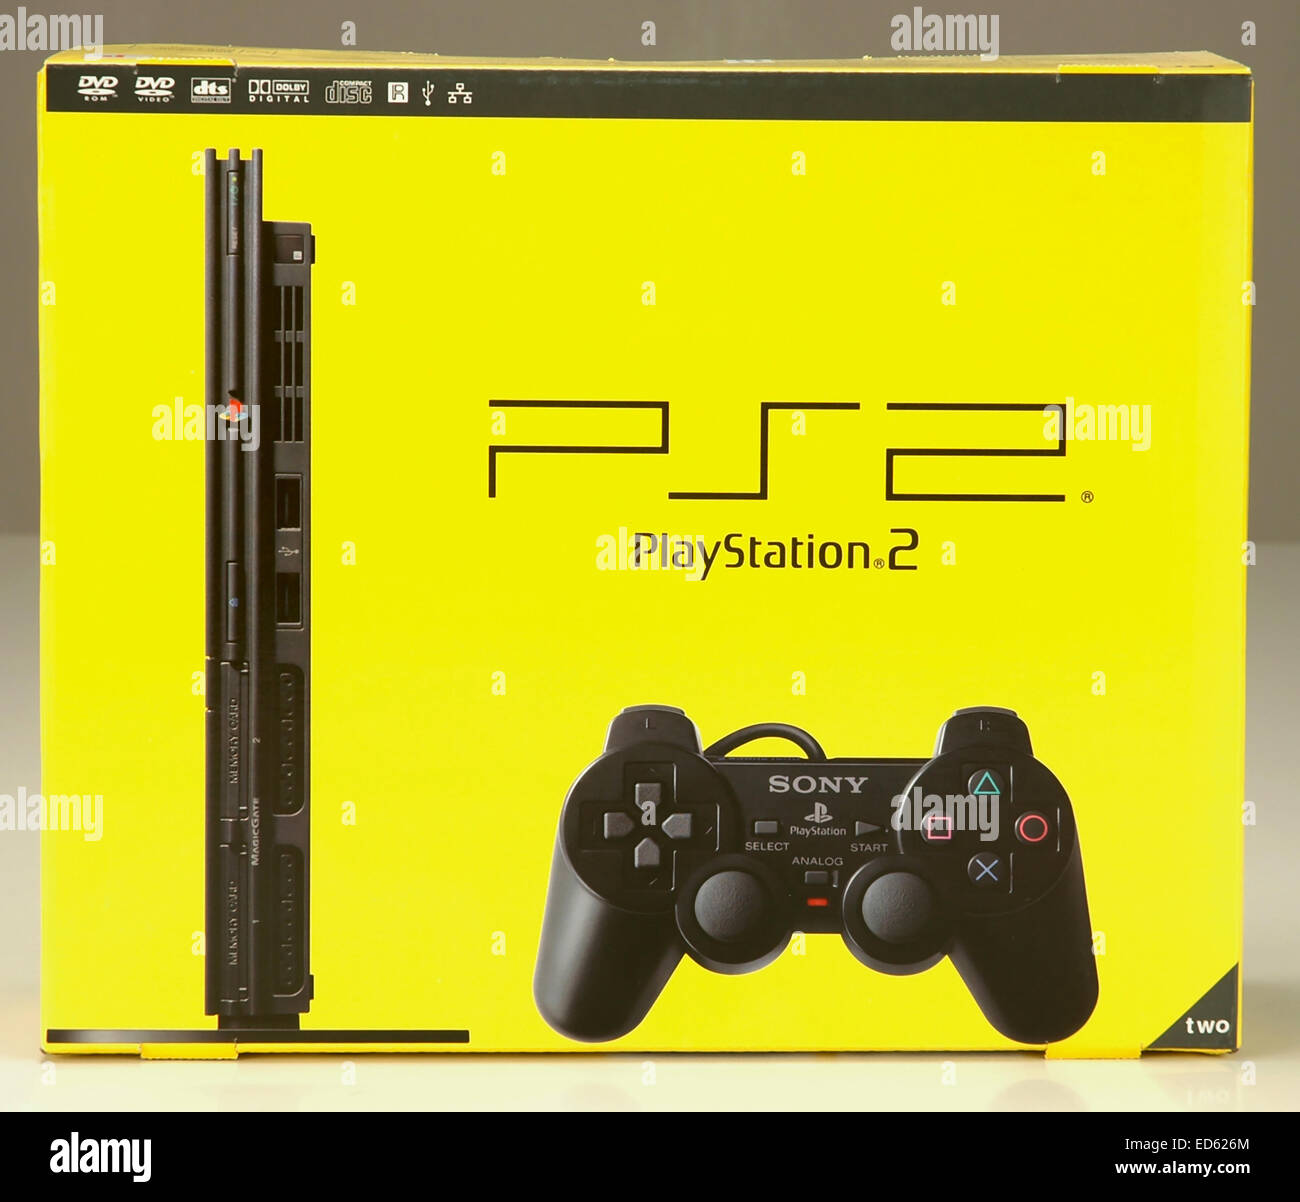 Sony Playstation 2 box Stock Photo - Alamy